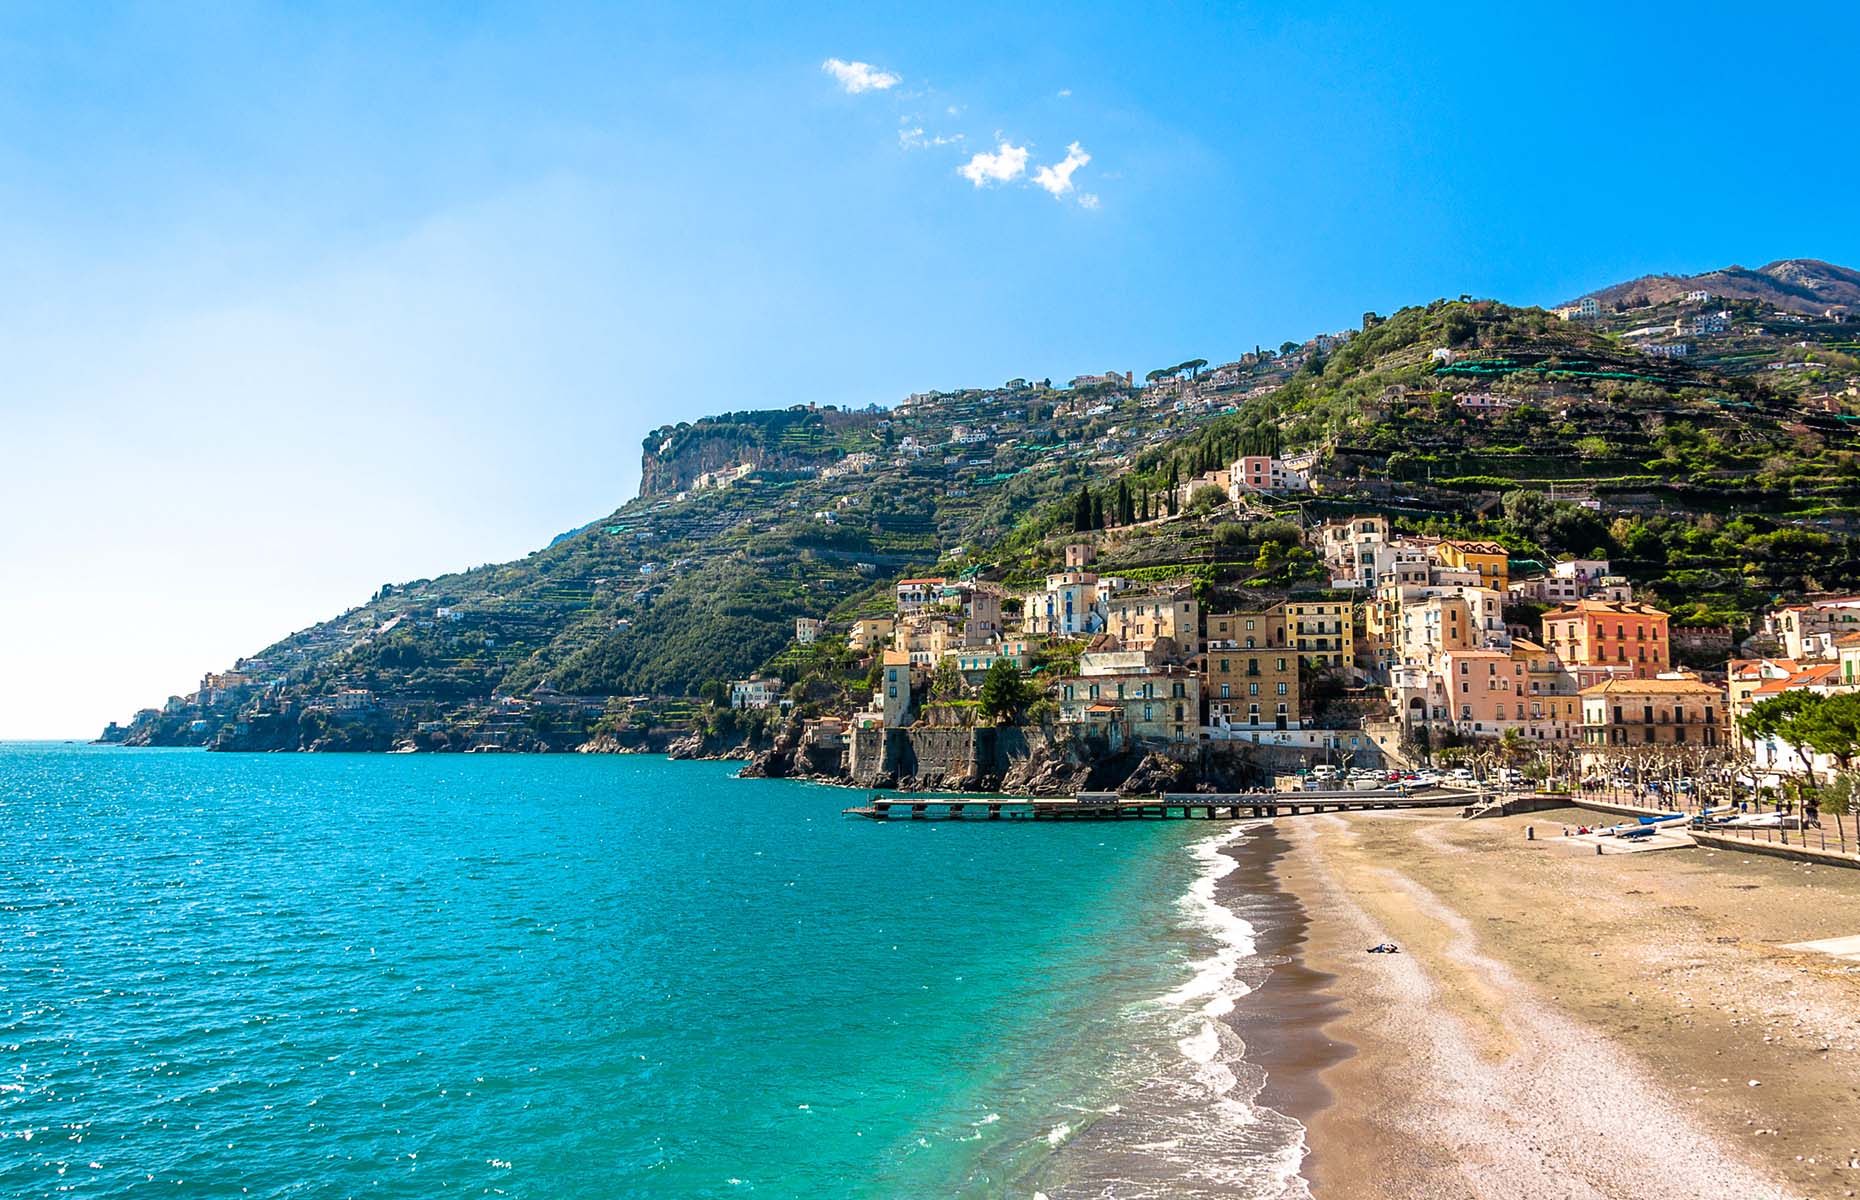 Maiori on the Amalfi Coast (Image: Pfeiffer/Shutterstock)